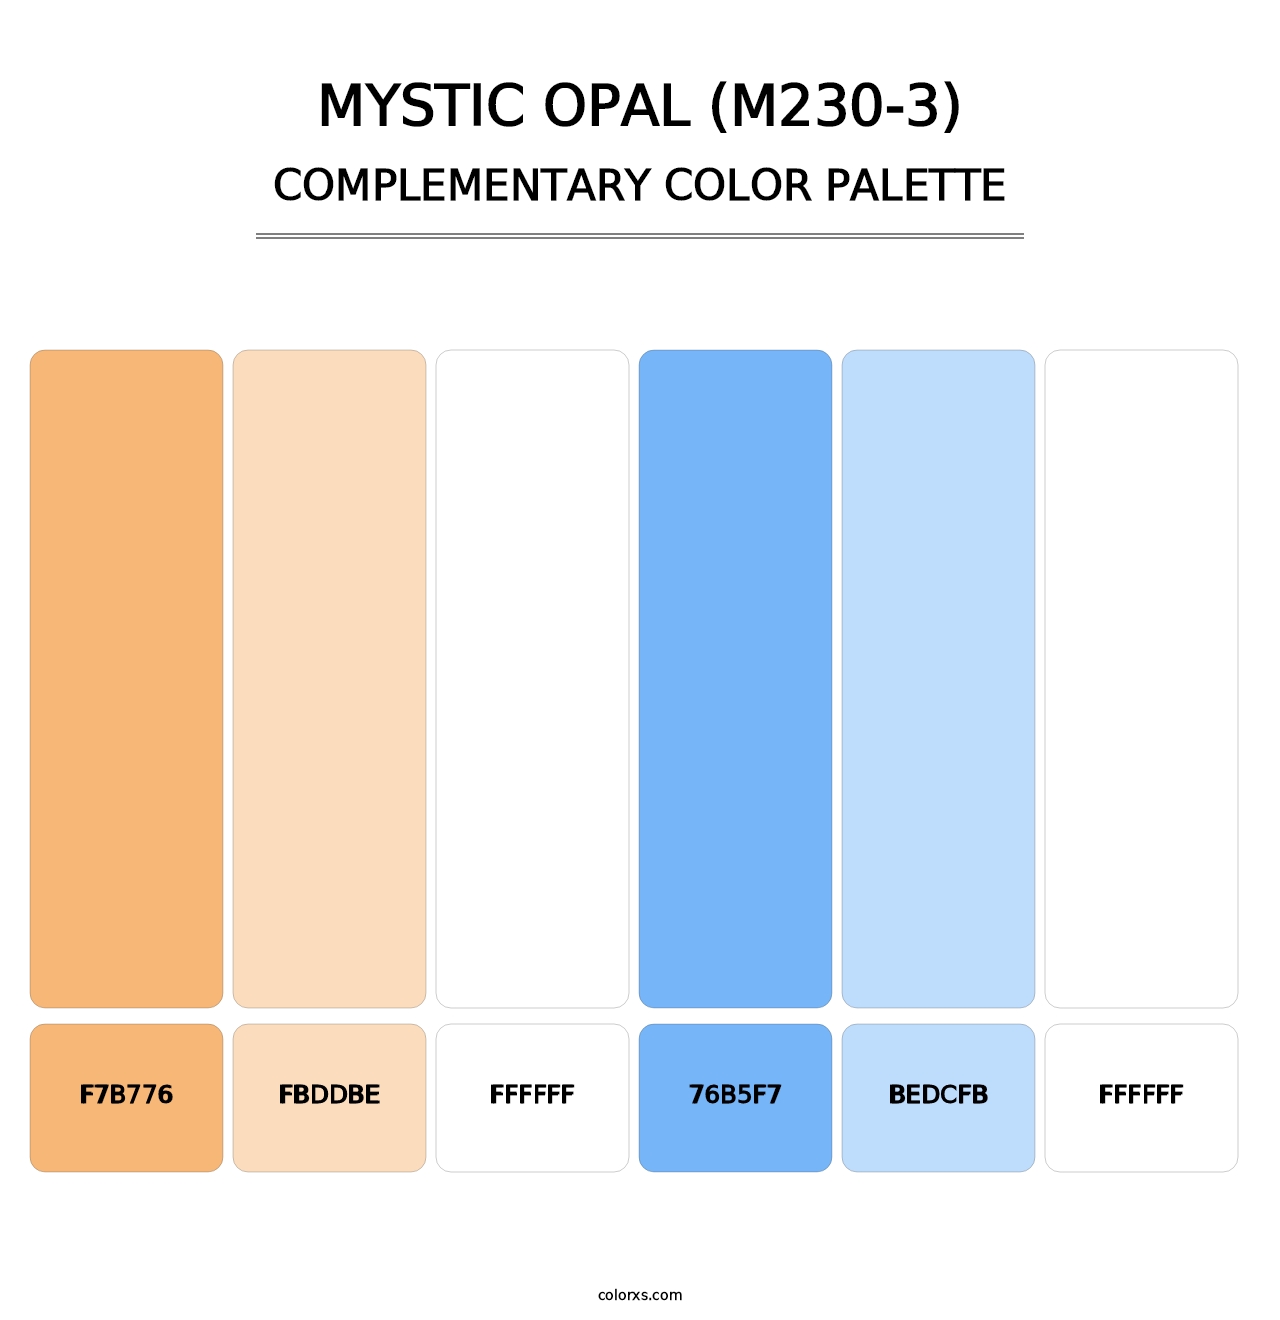 Mystic Opal (M230-3) - Complementary Color Palette